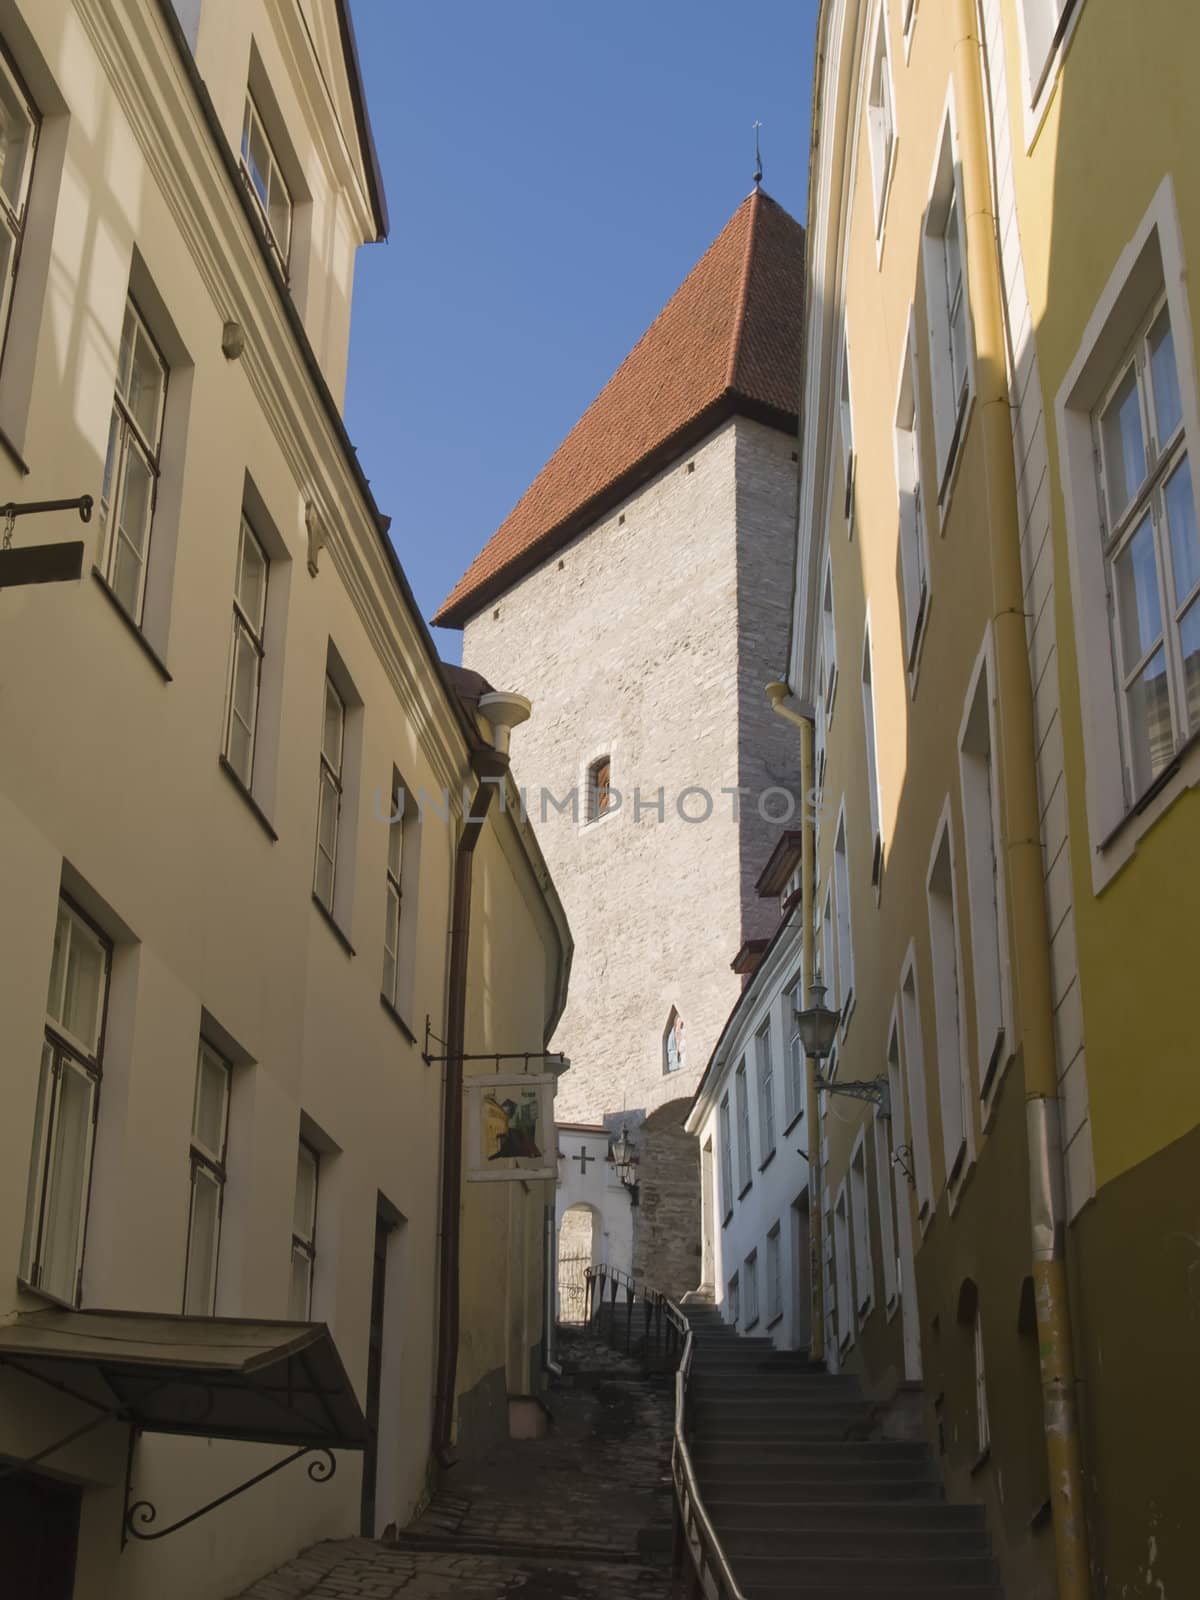 Streets of ancient city, Facades in capital of Estonia Tallinn by lem